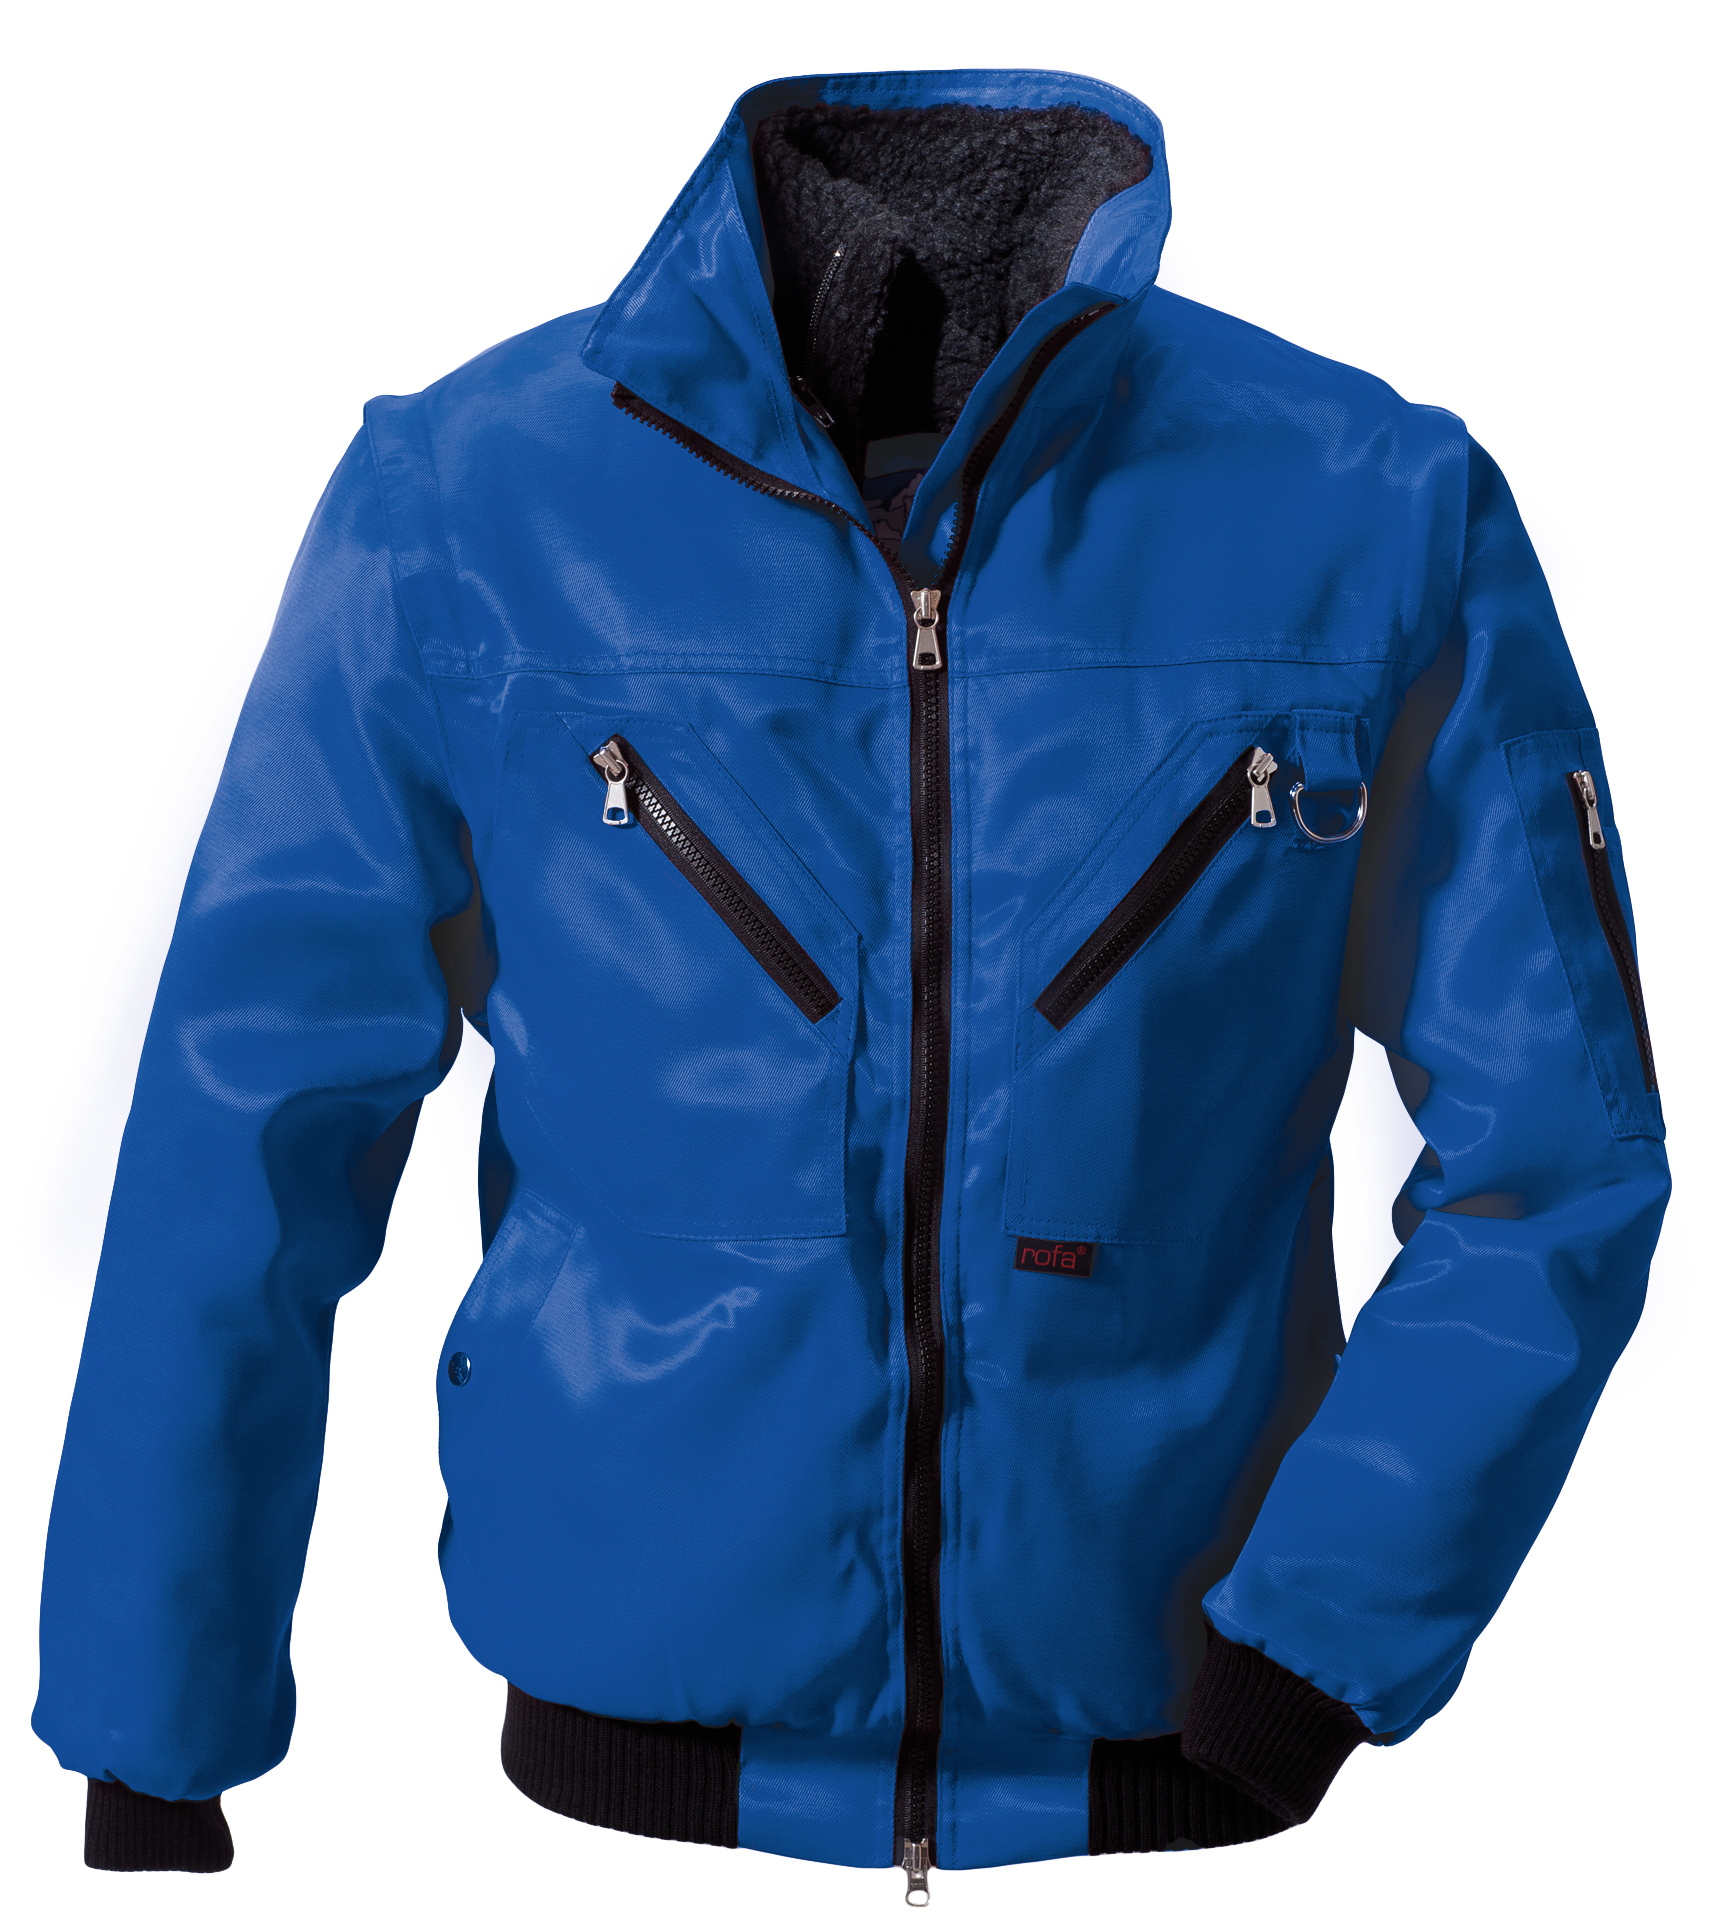 ROFA-Kälteschutz,Allround-Winter-Arbeits-Berufs-Jacke, Basic, 454, 245 g, kornblau
